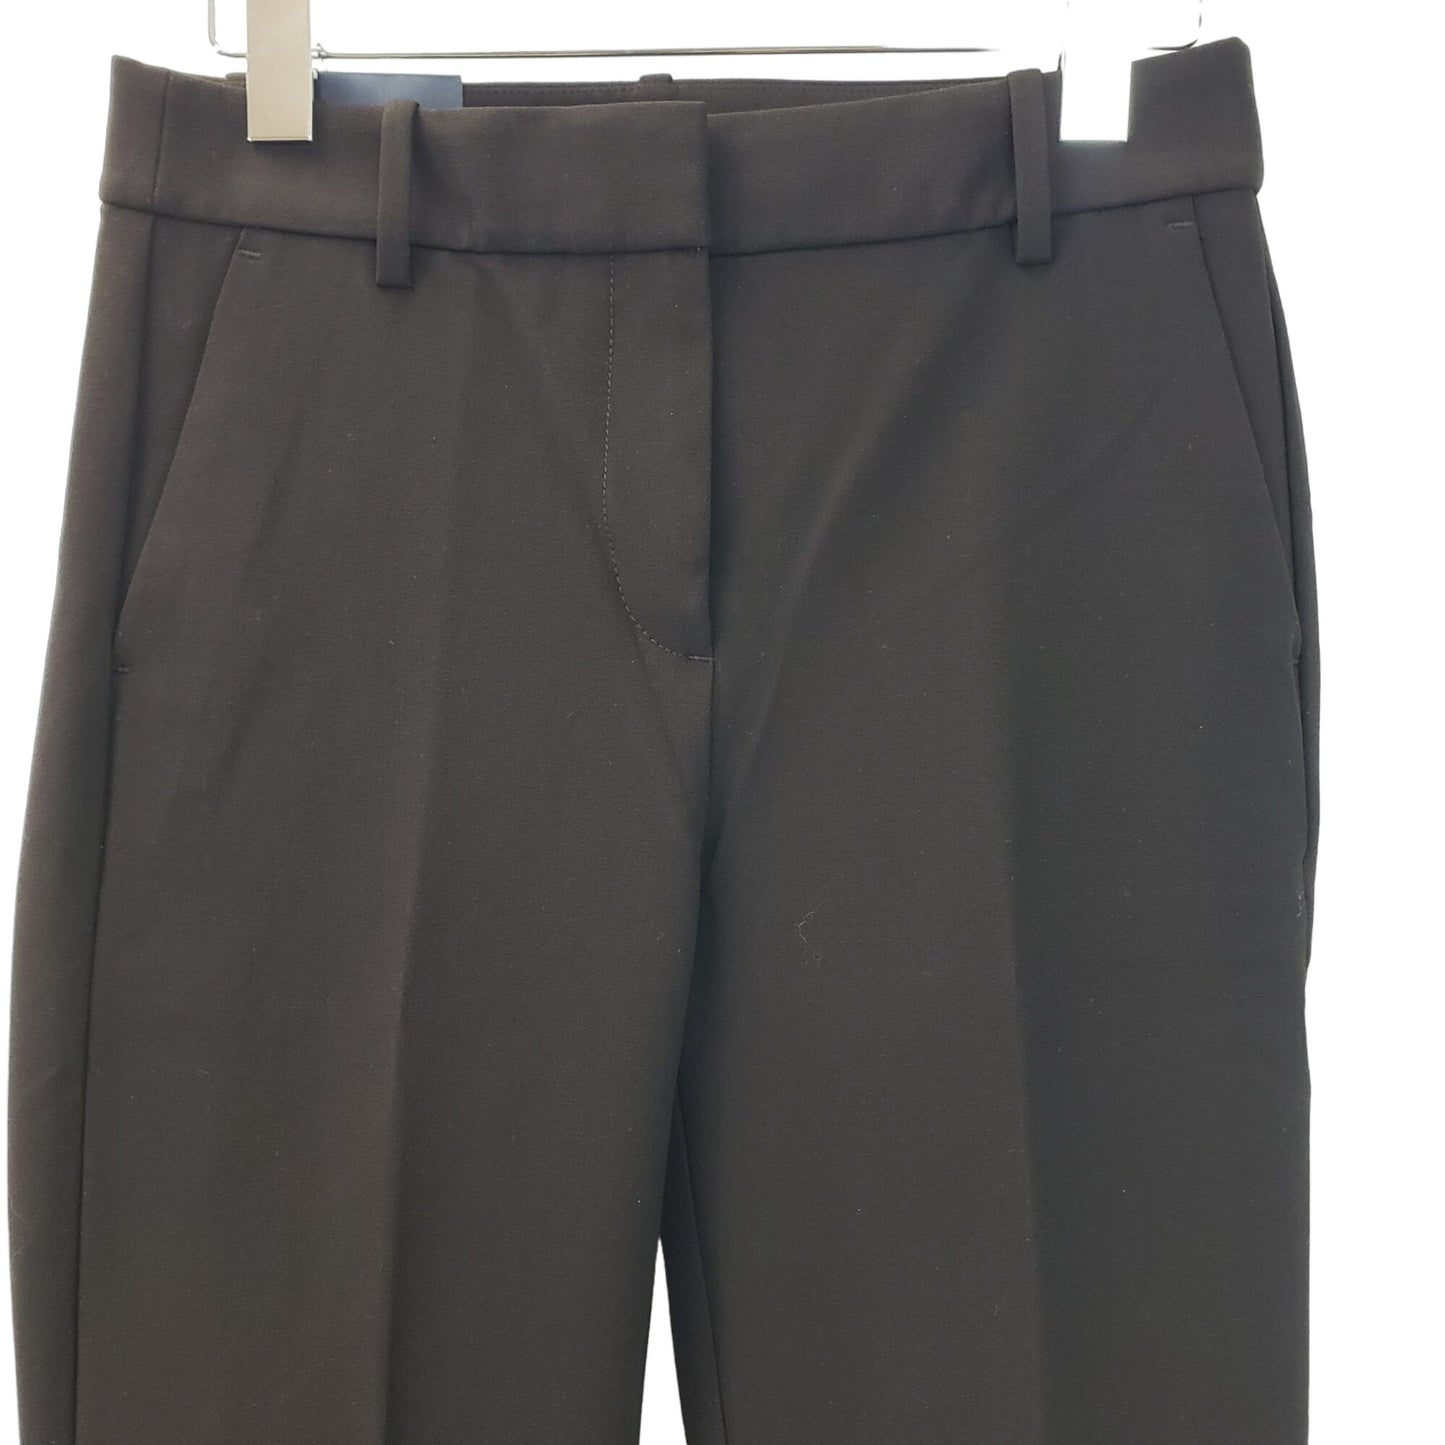 NWT J. Crew Factory Ruby Crop Trouser Pants Size 2 Petite